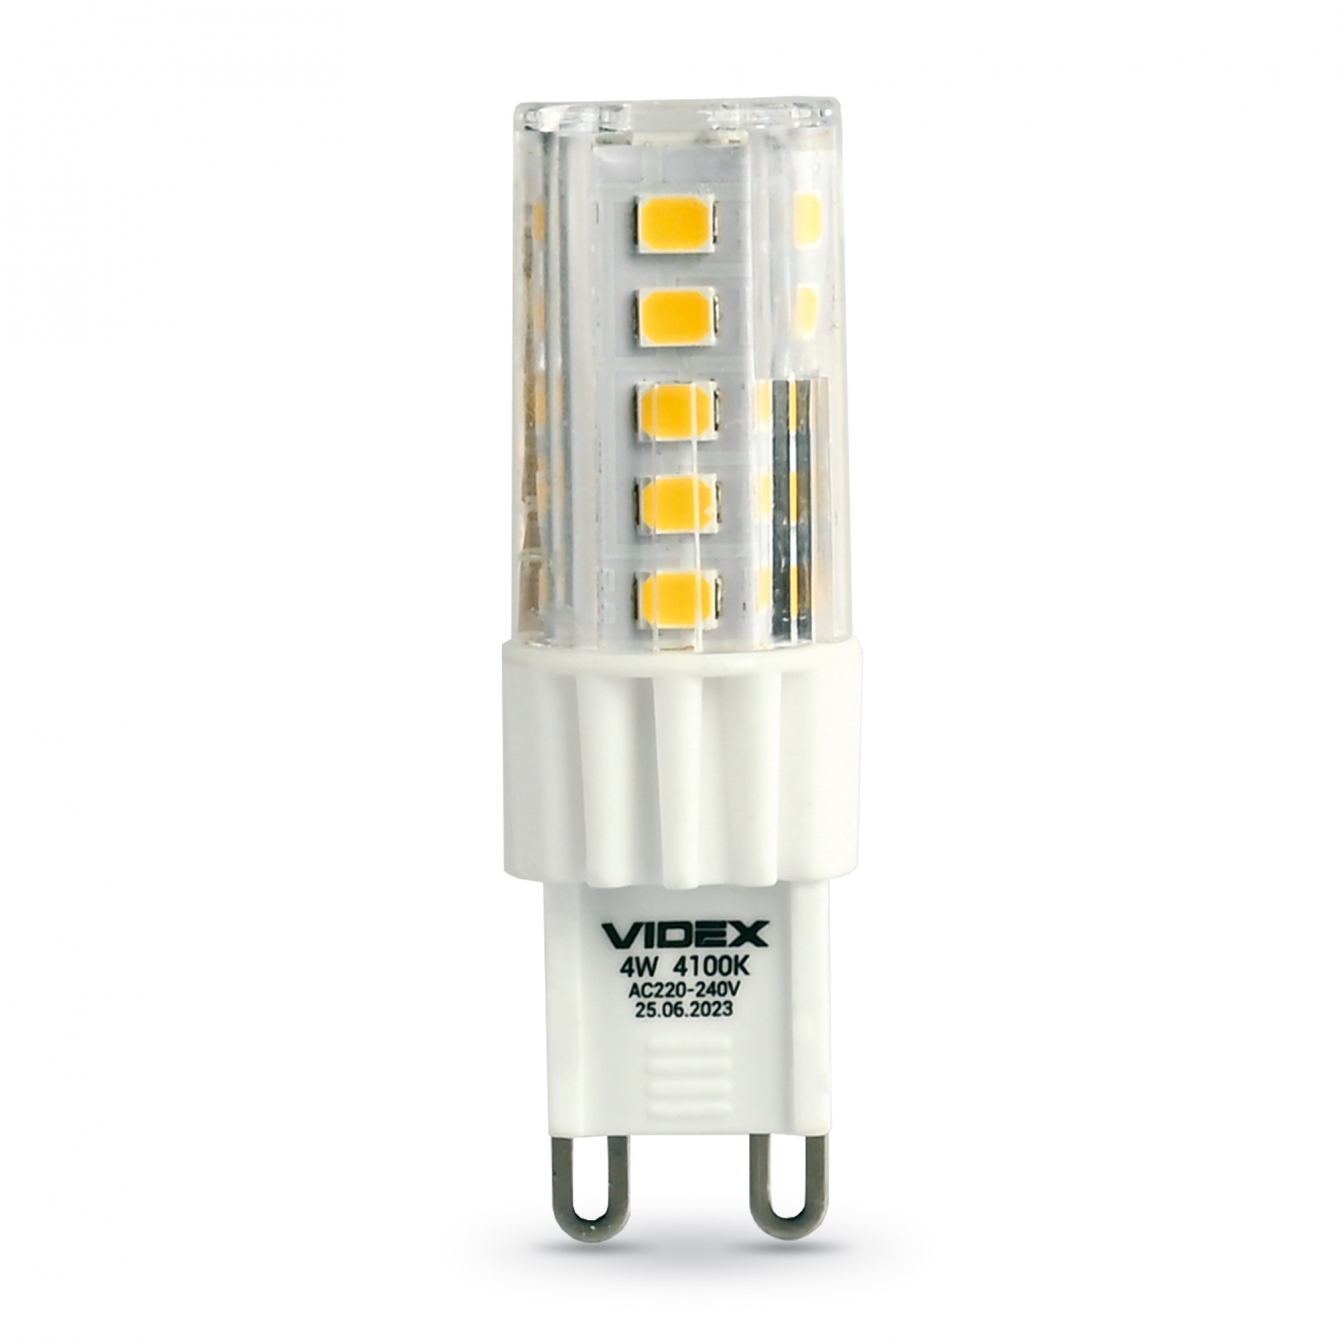 LED лампа VIDEX G9S 4W G9 4100K